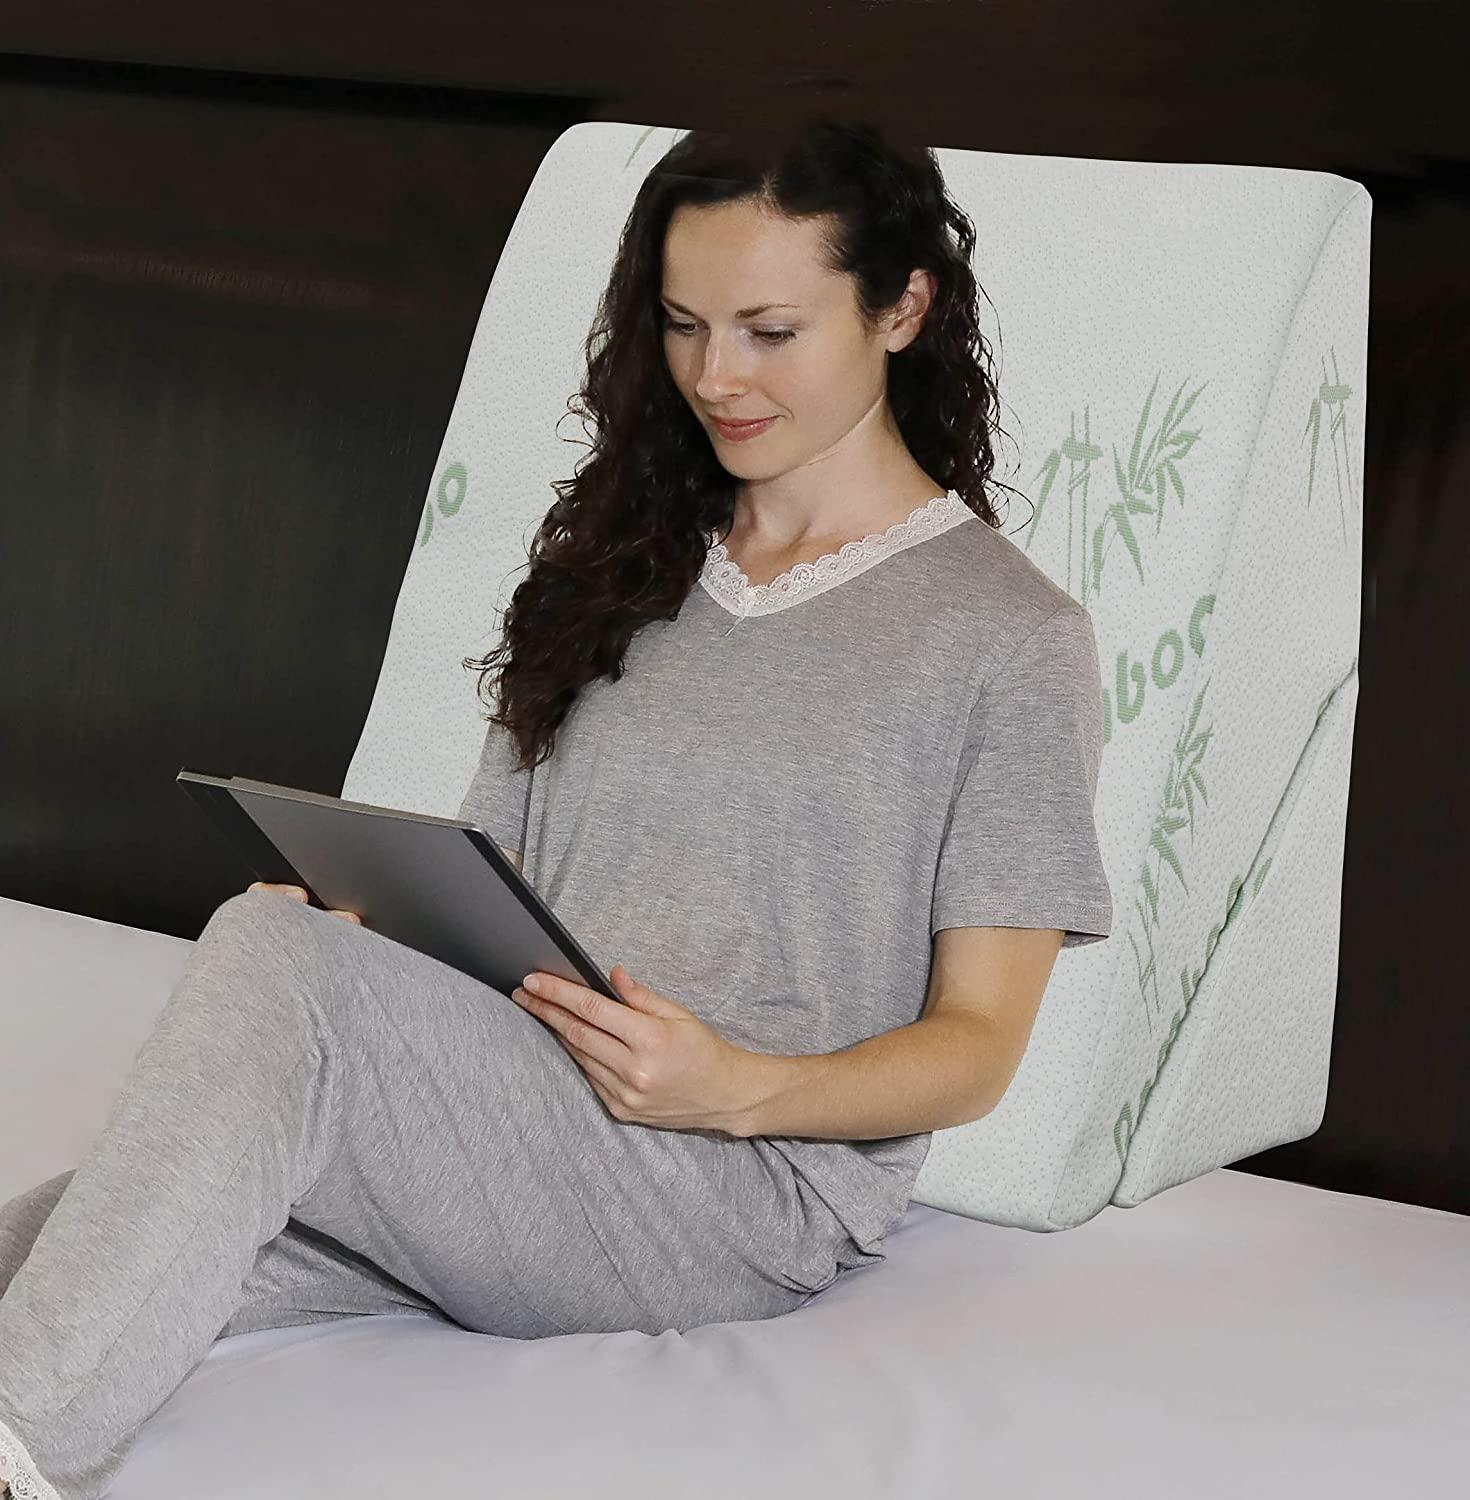 Bed Wedge Pillow - Adjustable Folding Cooling Gel Memory Foam